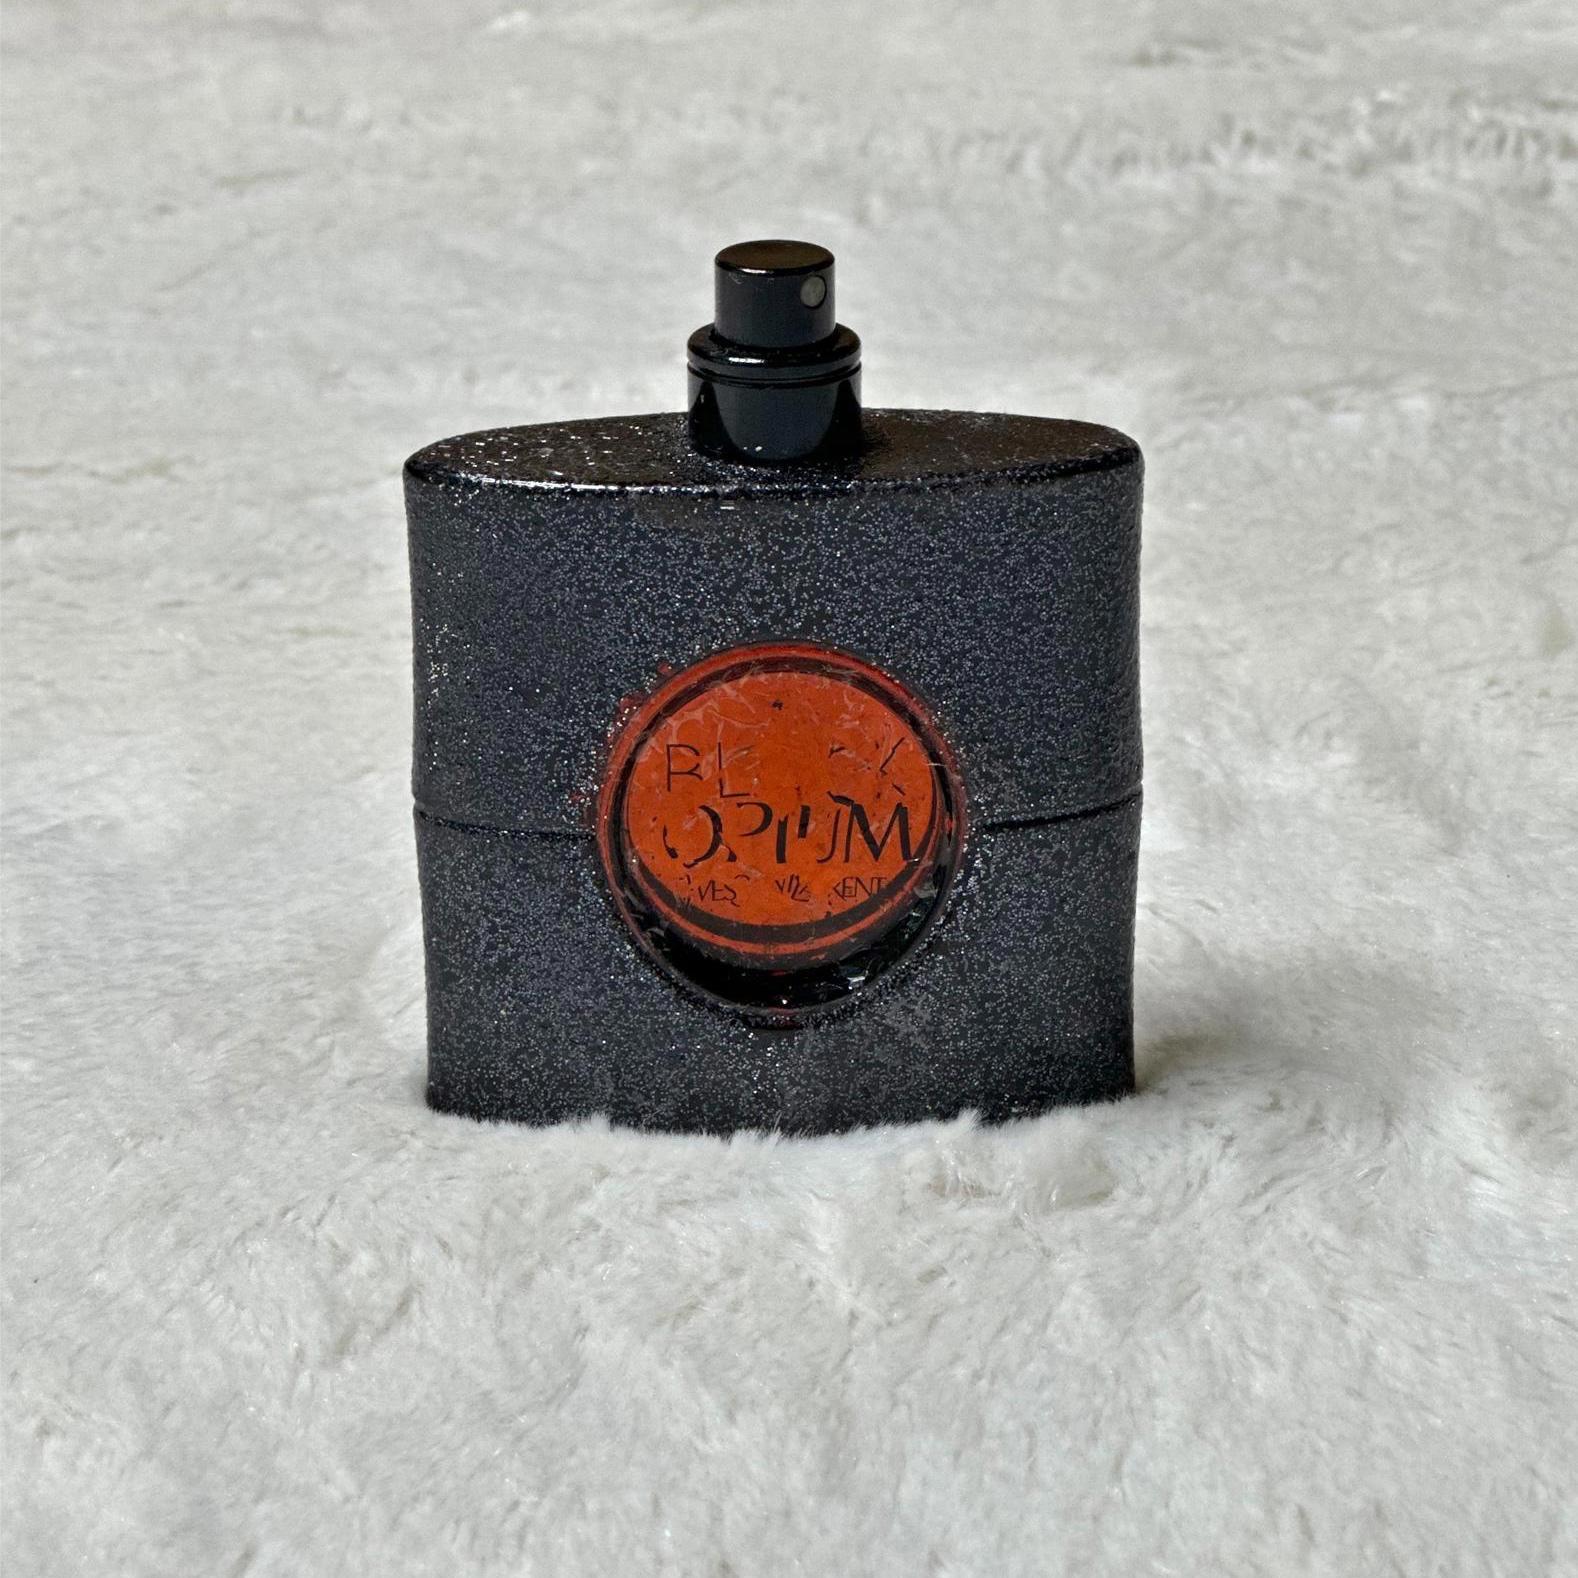 YSL Black Opium Eau de Parfum Spray 1.6fl oz Women’s Fragrance 